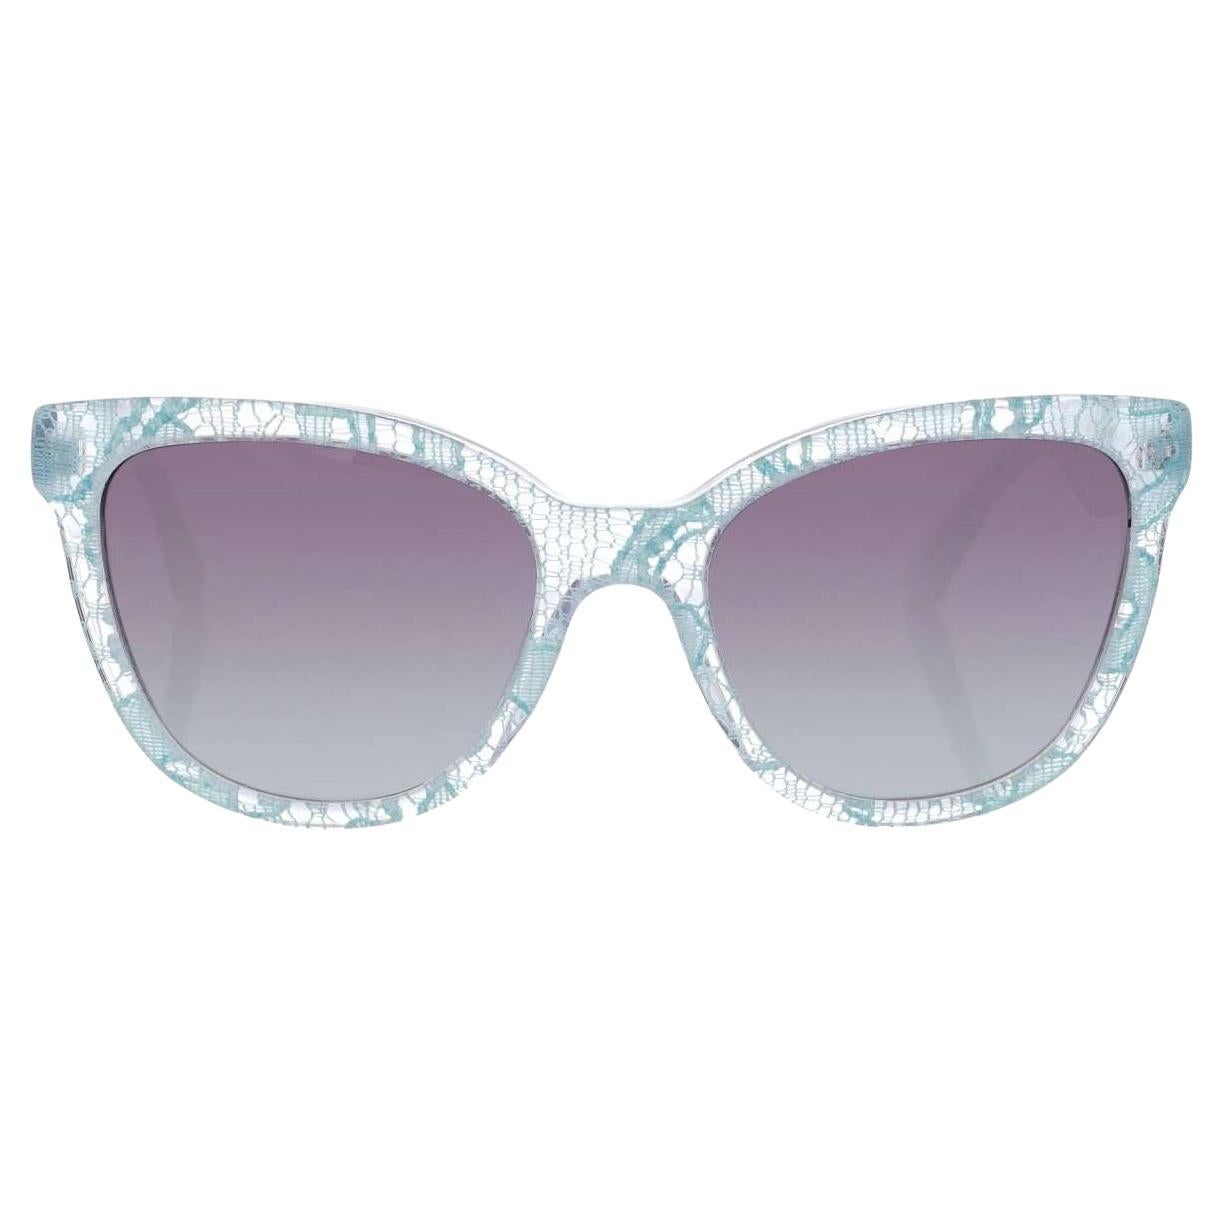 Dolce and Gabbana - Taormina Lace Sunglasses DG 4190 Gray Blue at